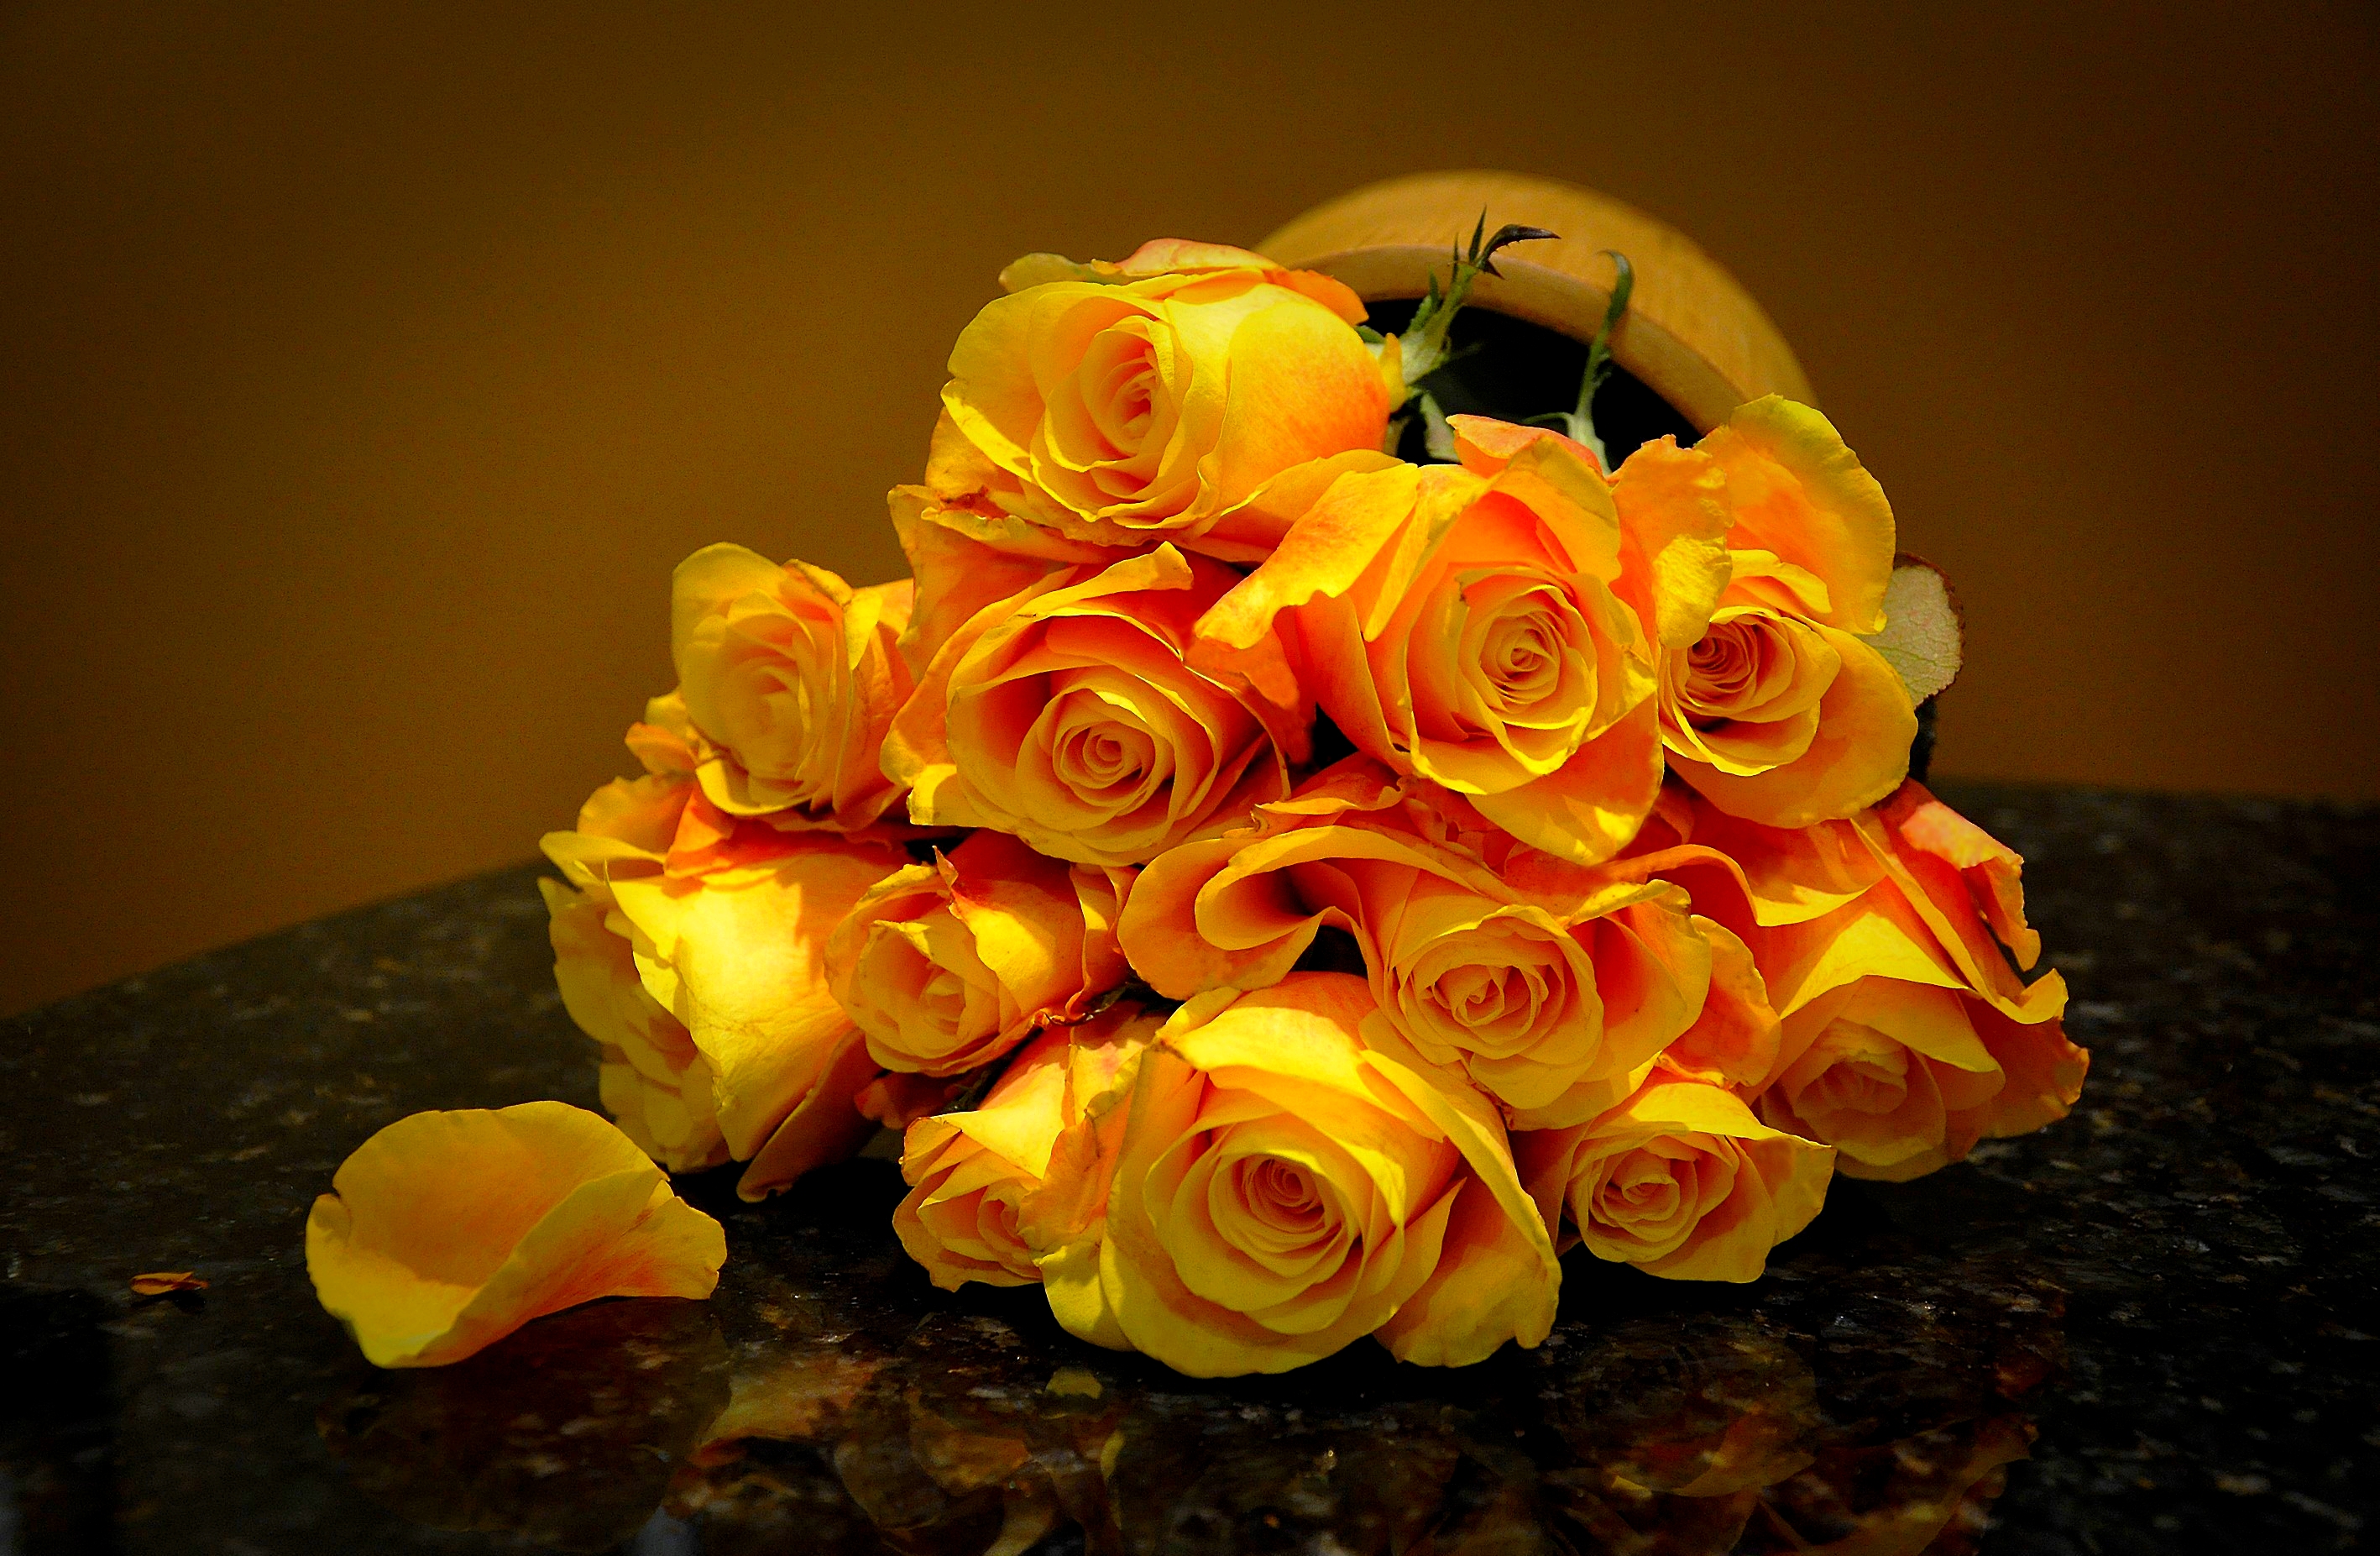 earth, rose, flower, still life, yellow flower, yellow rose, flowers